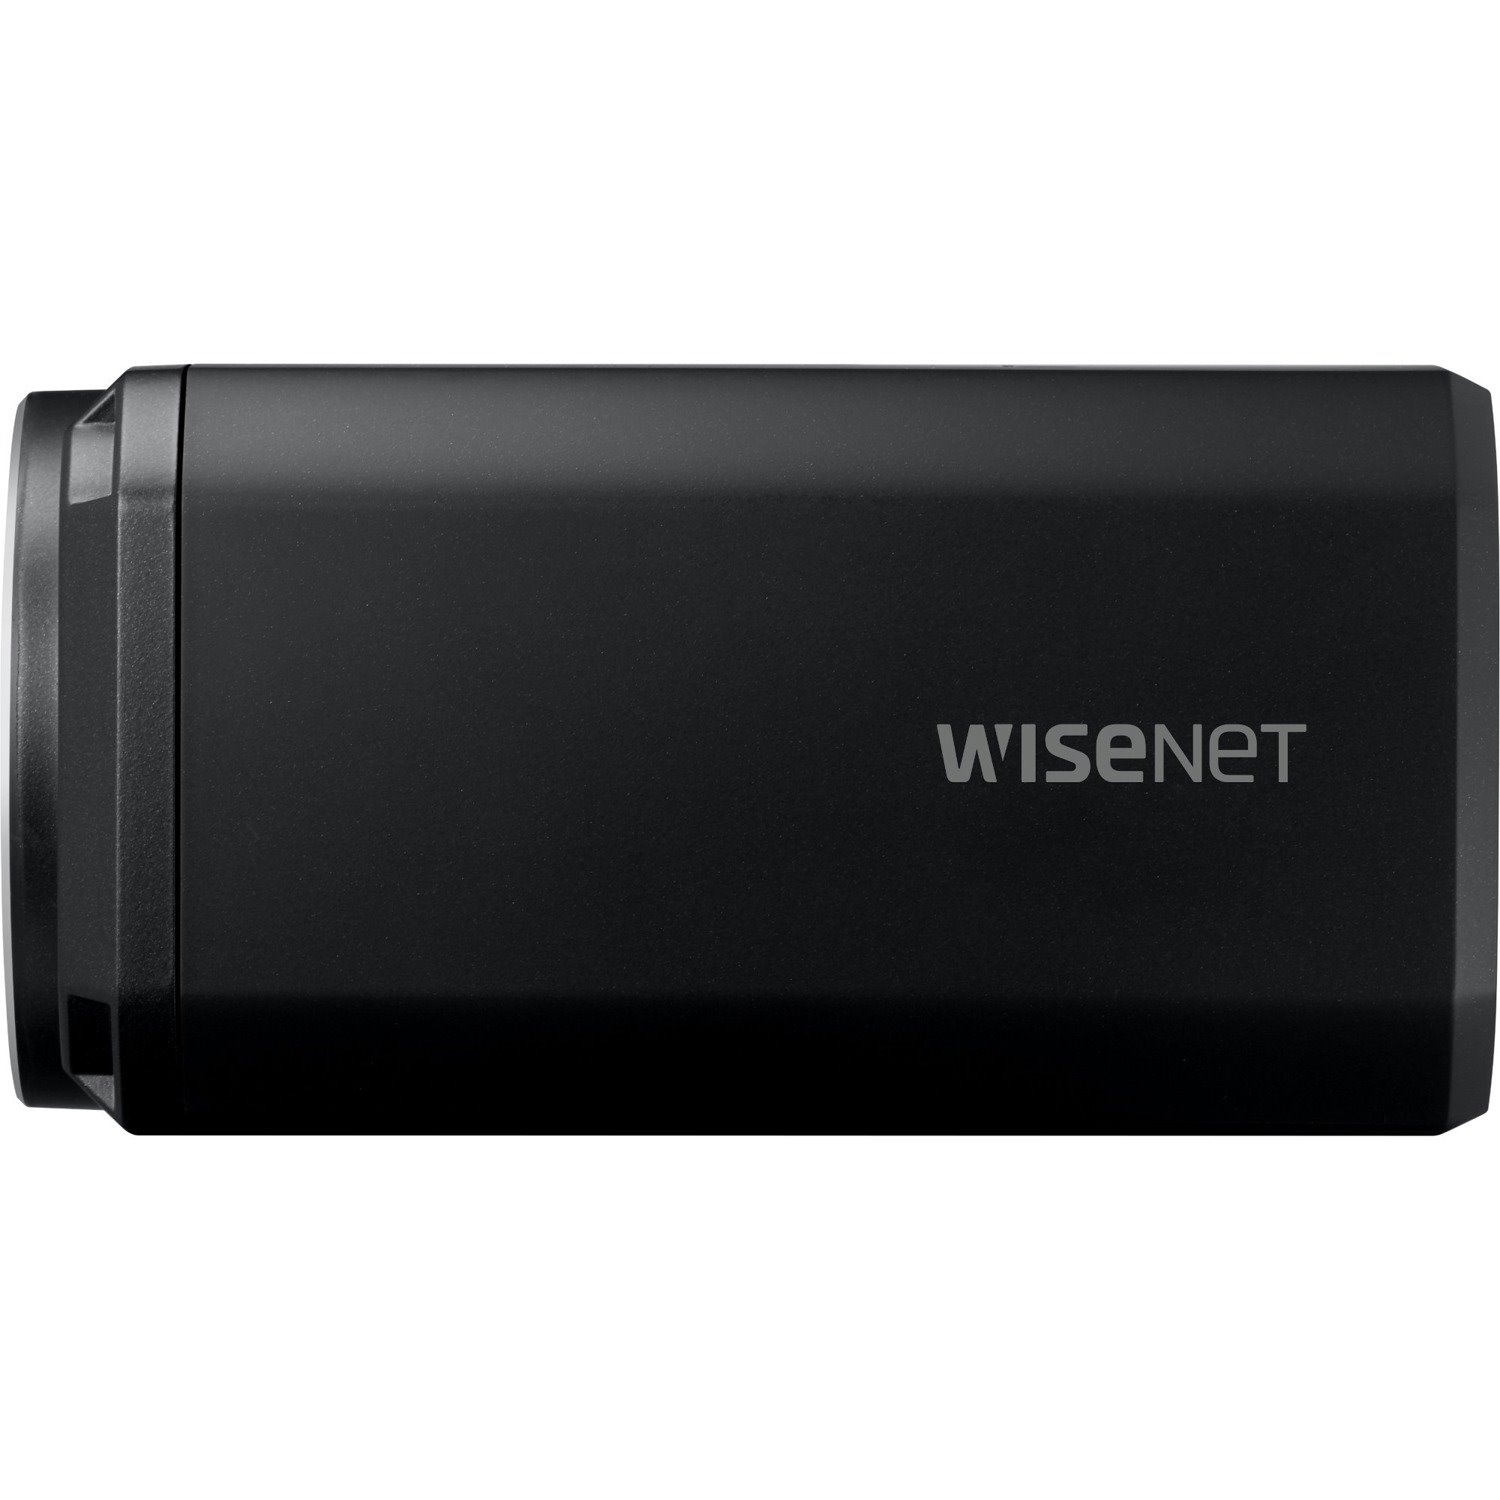 Wisenet XNZ-6320A 2 Megapixel Full HD Network Camera - Color - Box - Dark Gray